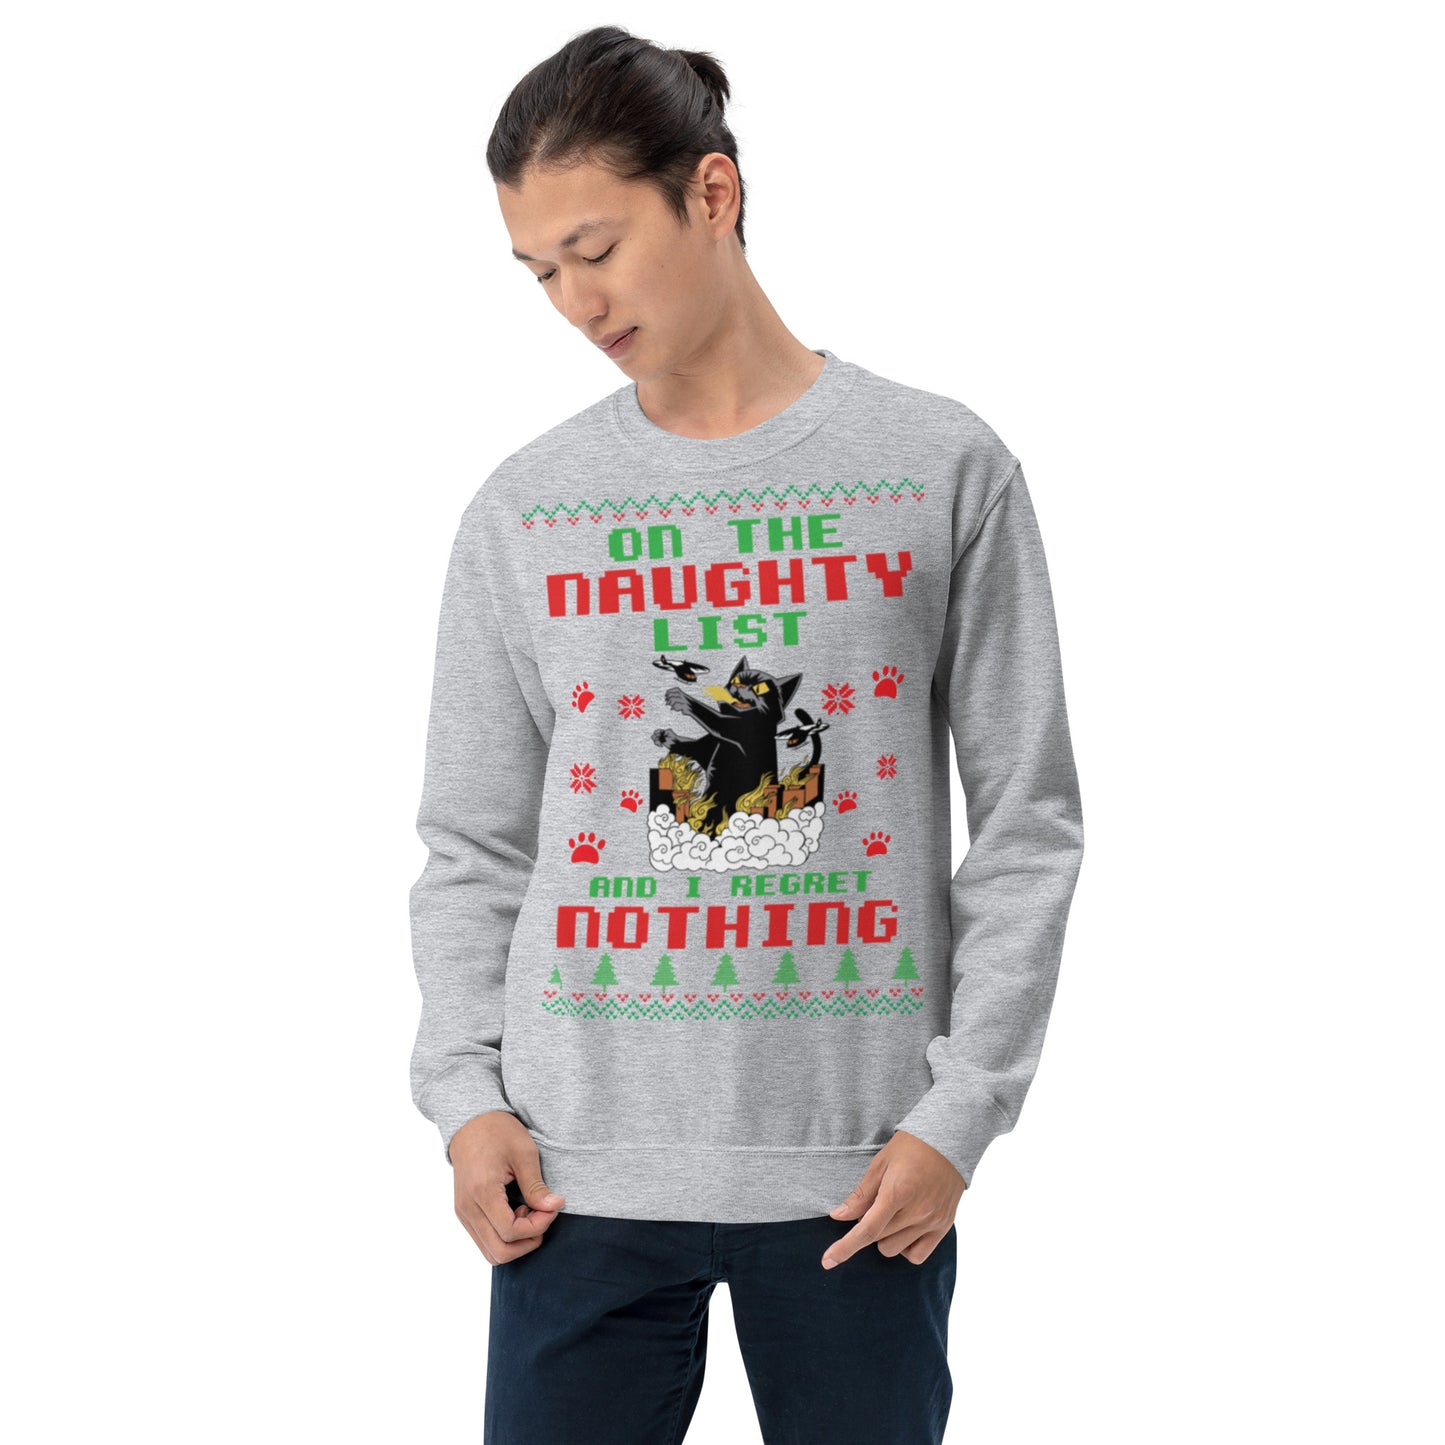 On The Naughty List And I Regret Nothing Unisex Sweatshirt